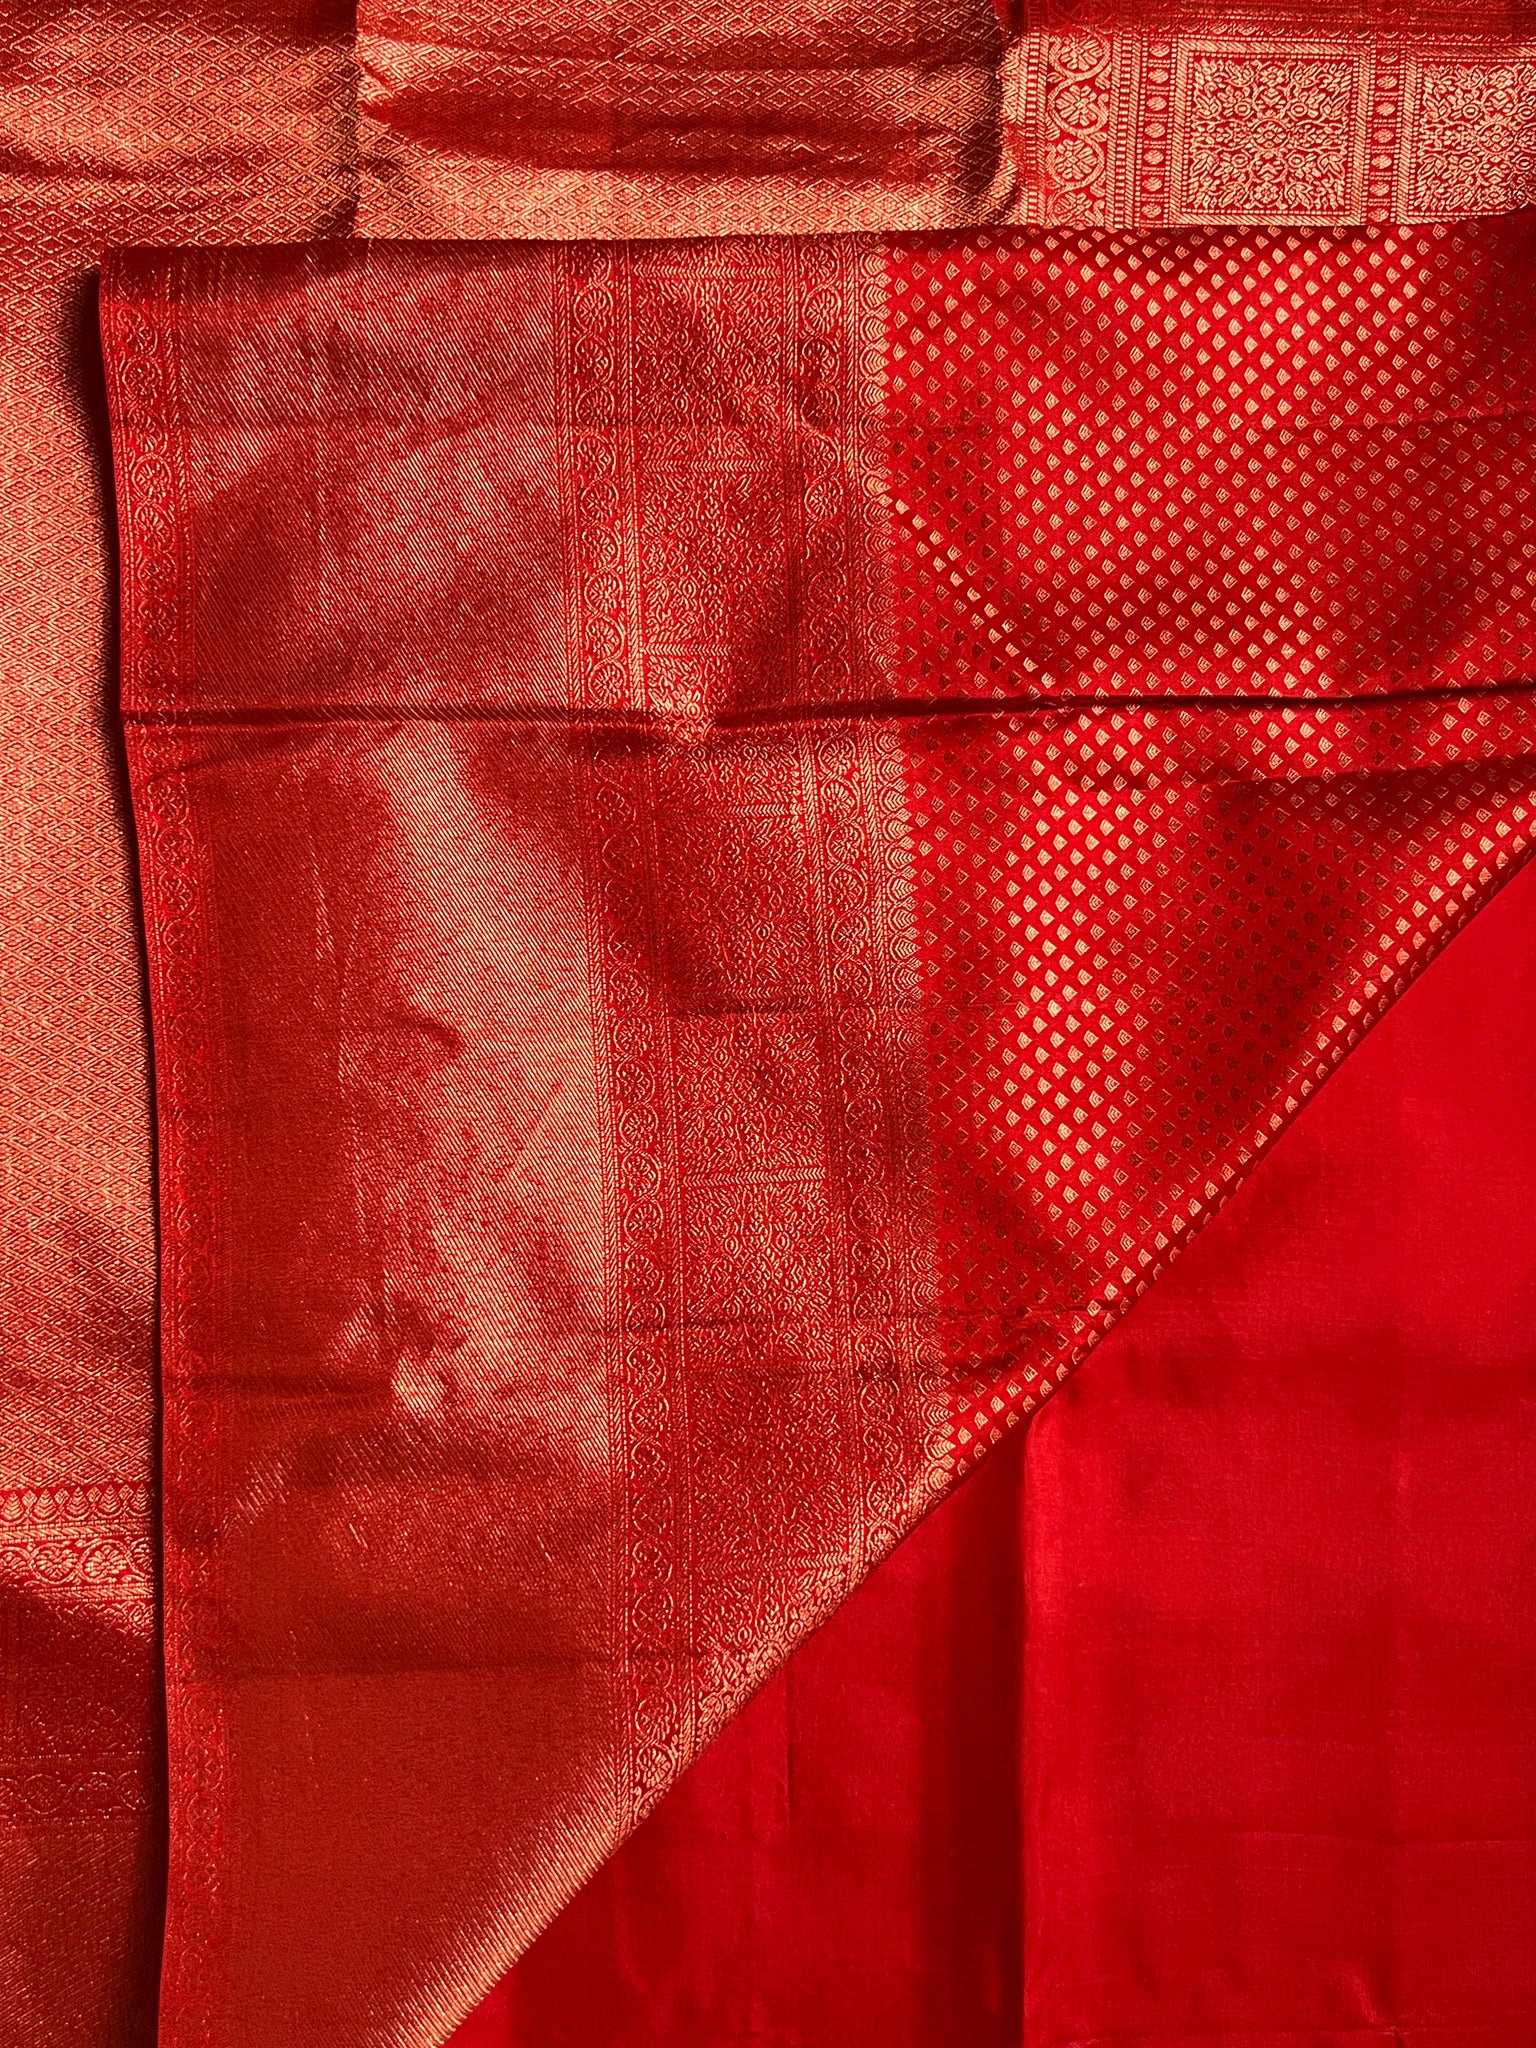 Honey Rose looks ravishing in a red chiffon saree at an inaugural function!